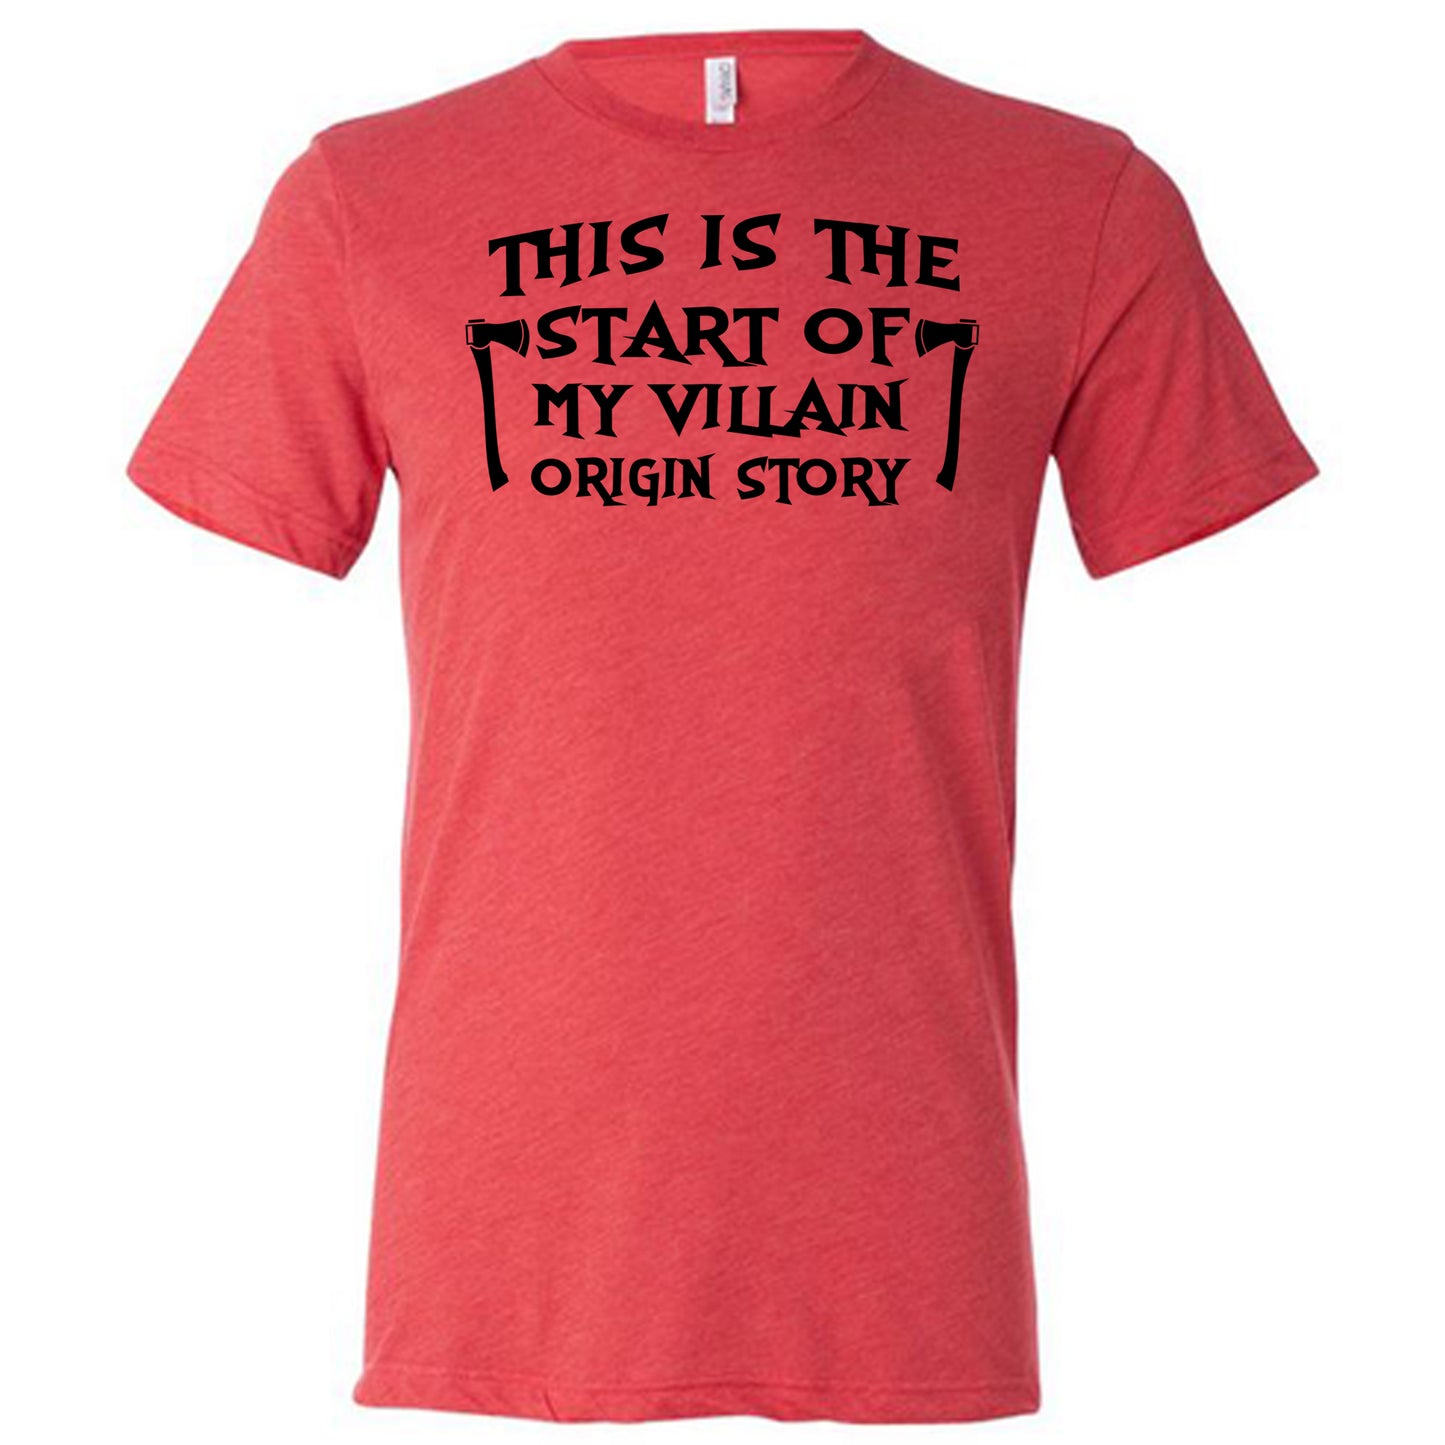 This Is The Start Of My Villain Origin Story red unisex shirt